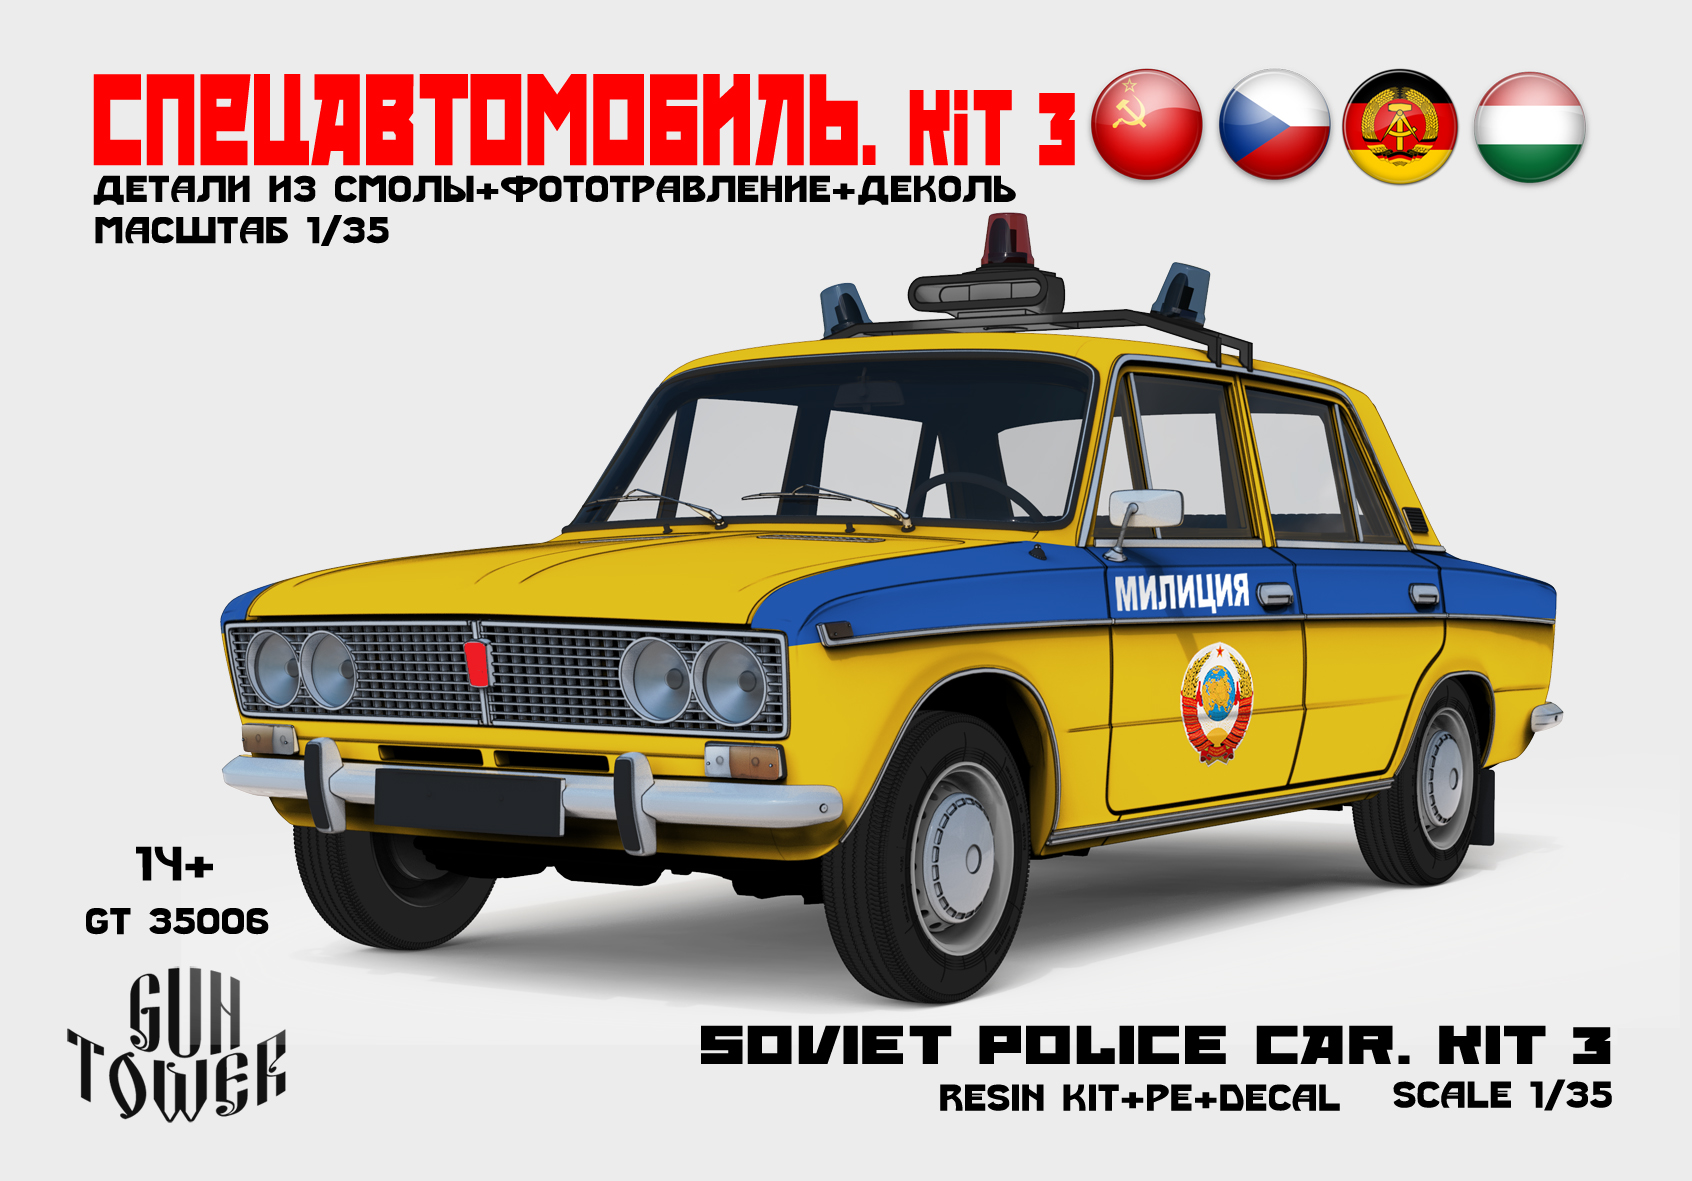 Soviet police car.Kit 3 (2103)